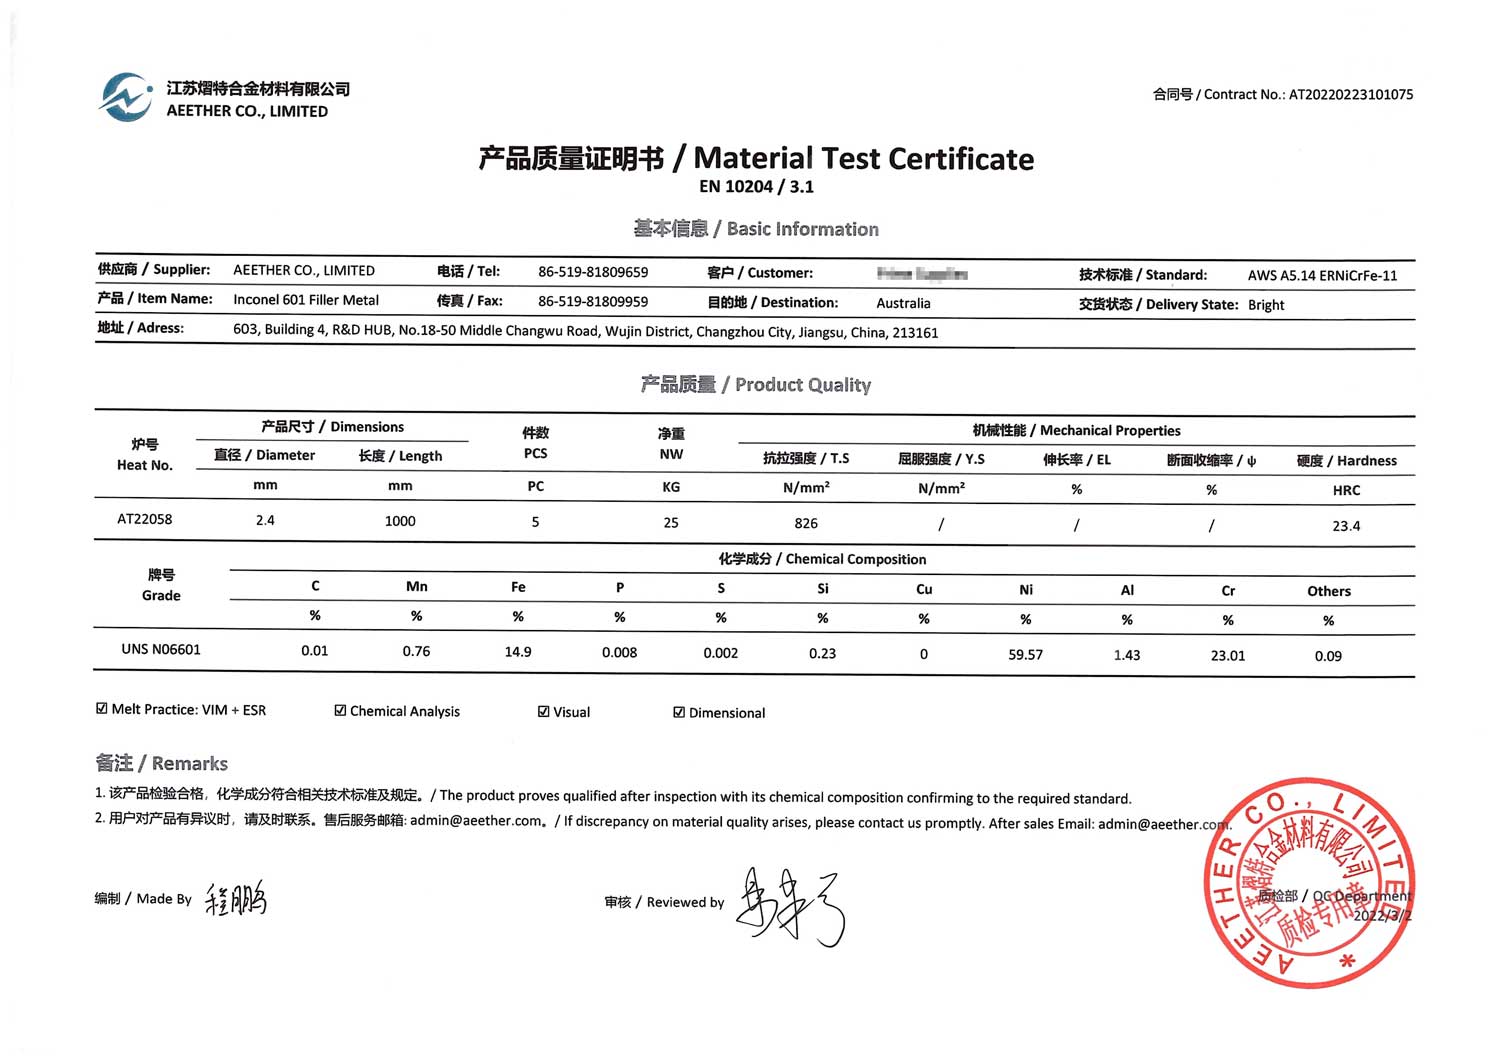 material test certificate for inconel 601 filler metal